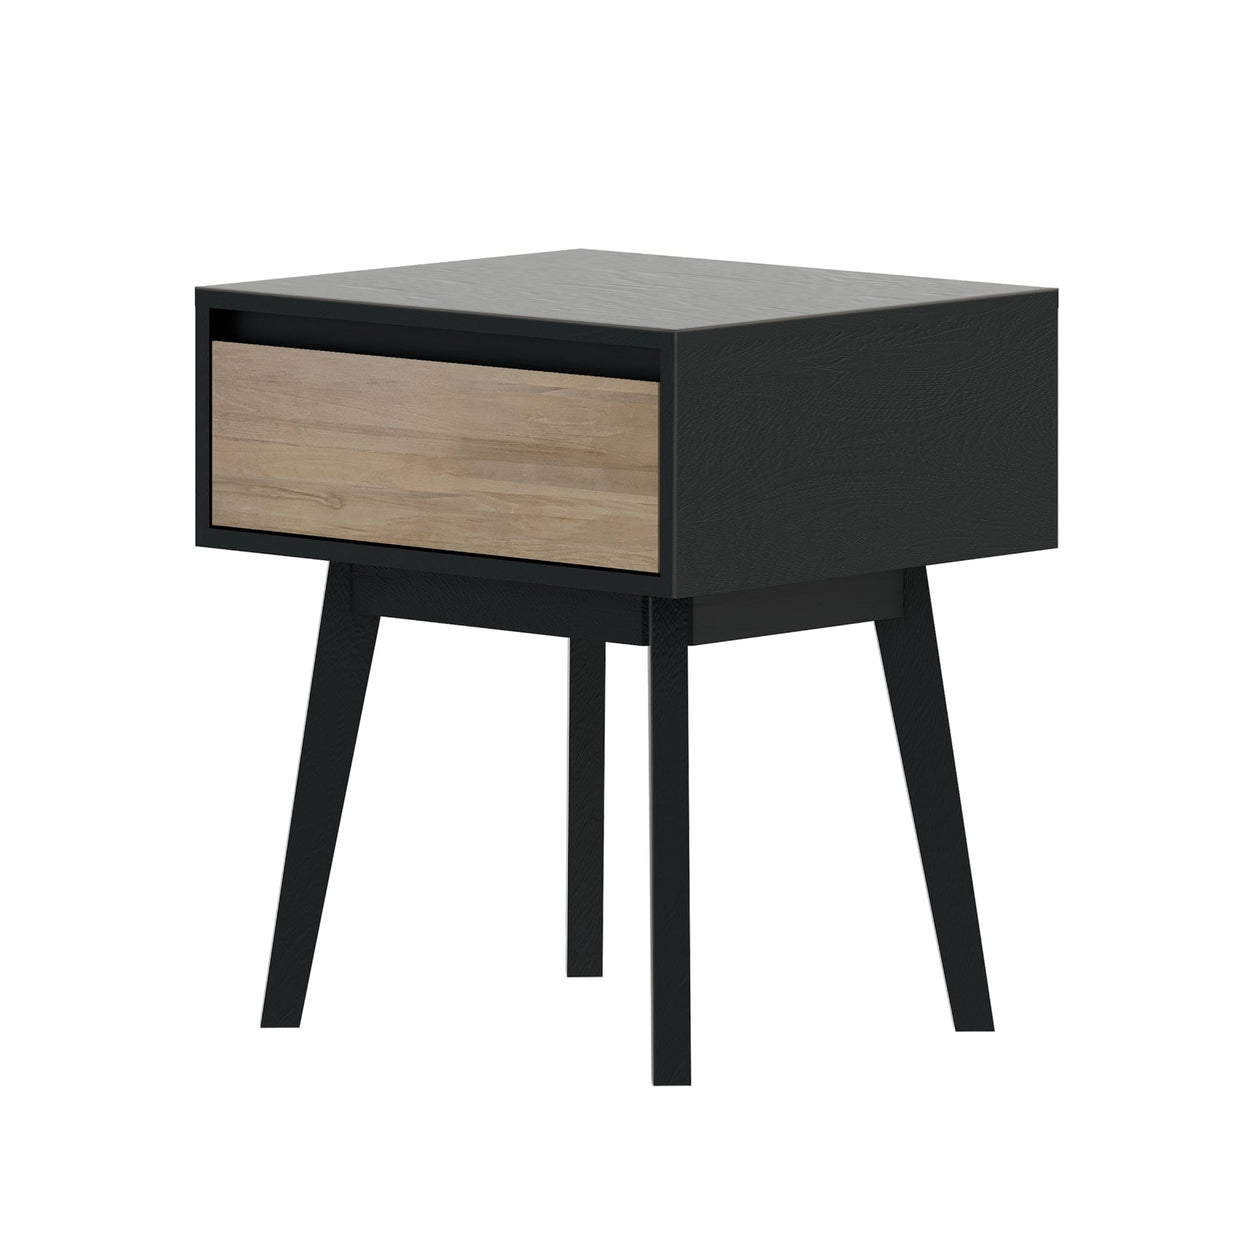 210001-272 : Furniture Scandinavian Nightstand with 1 Drawer, Black/Blonde